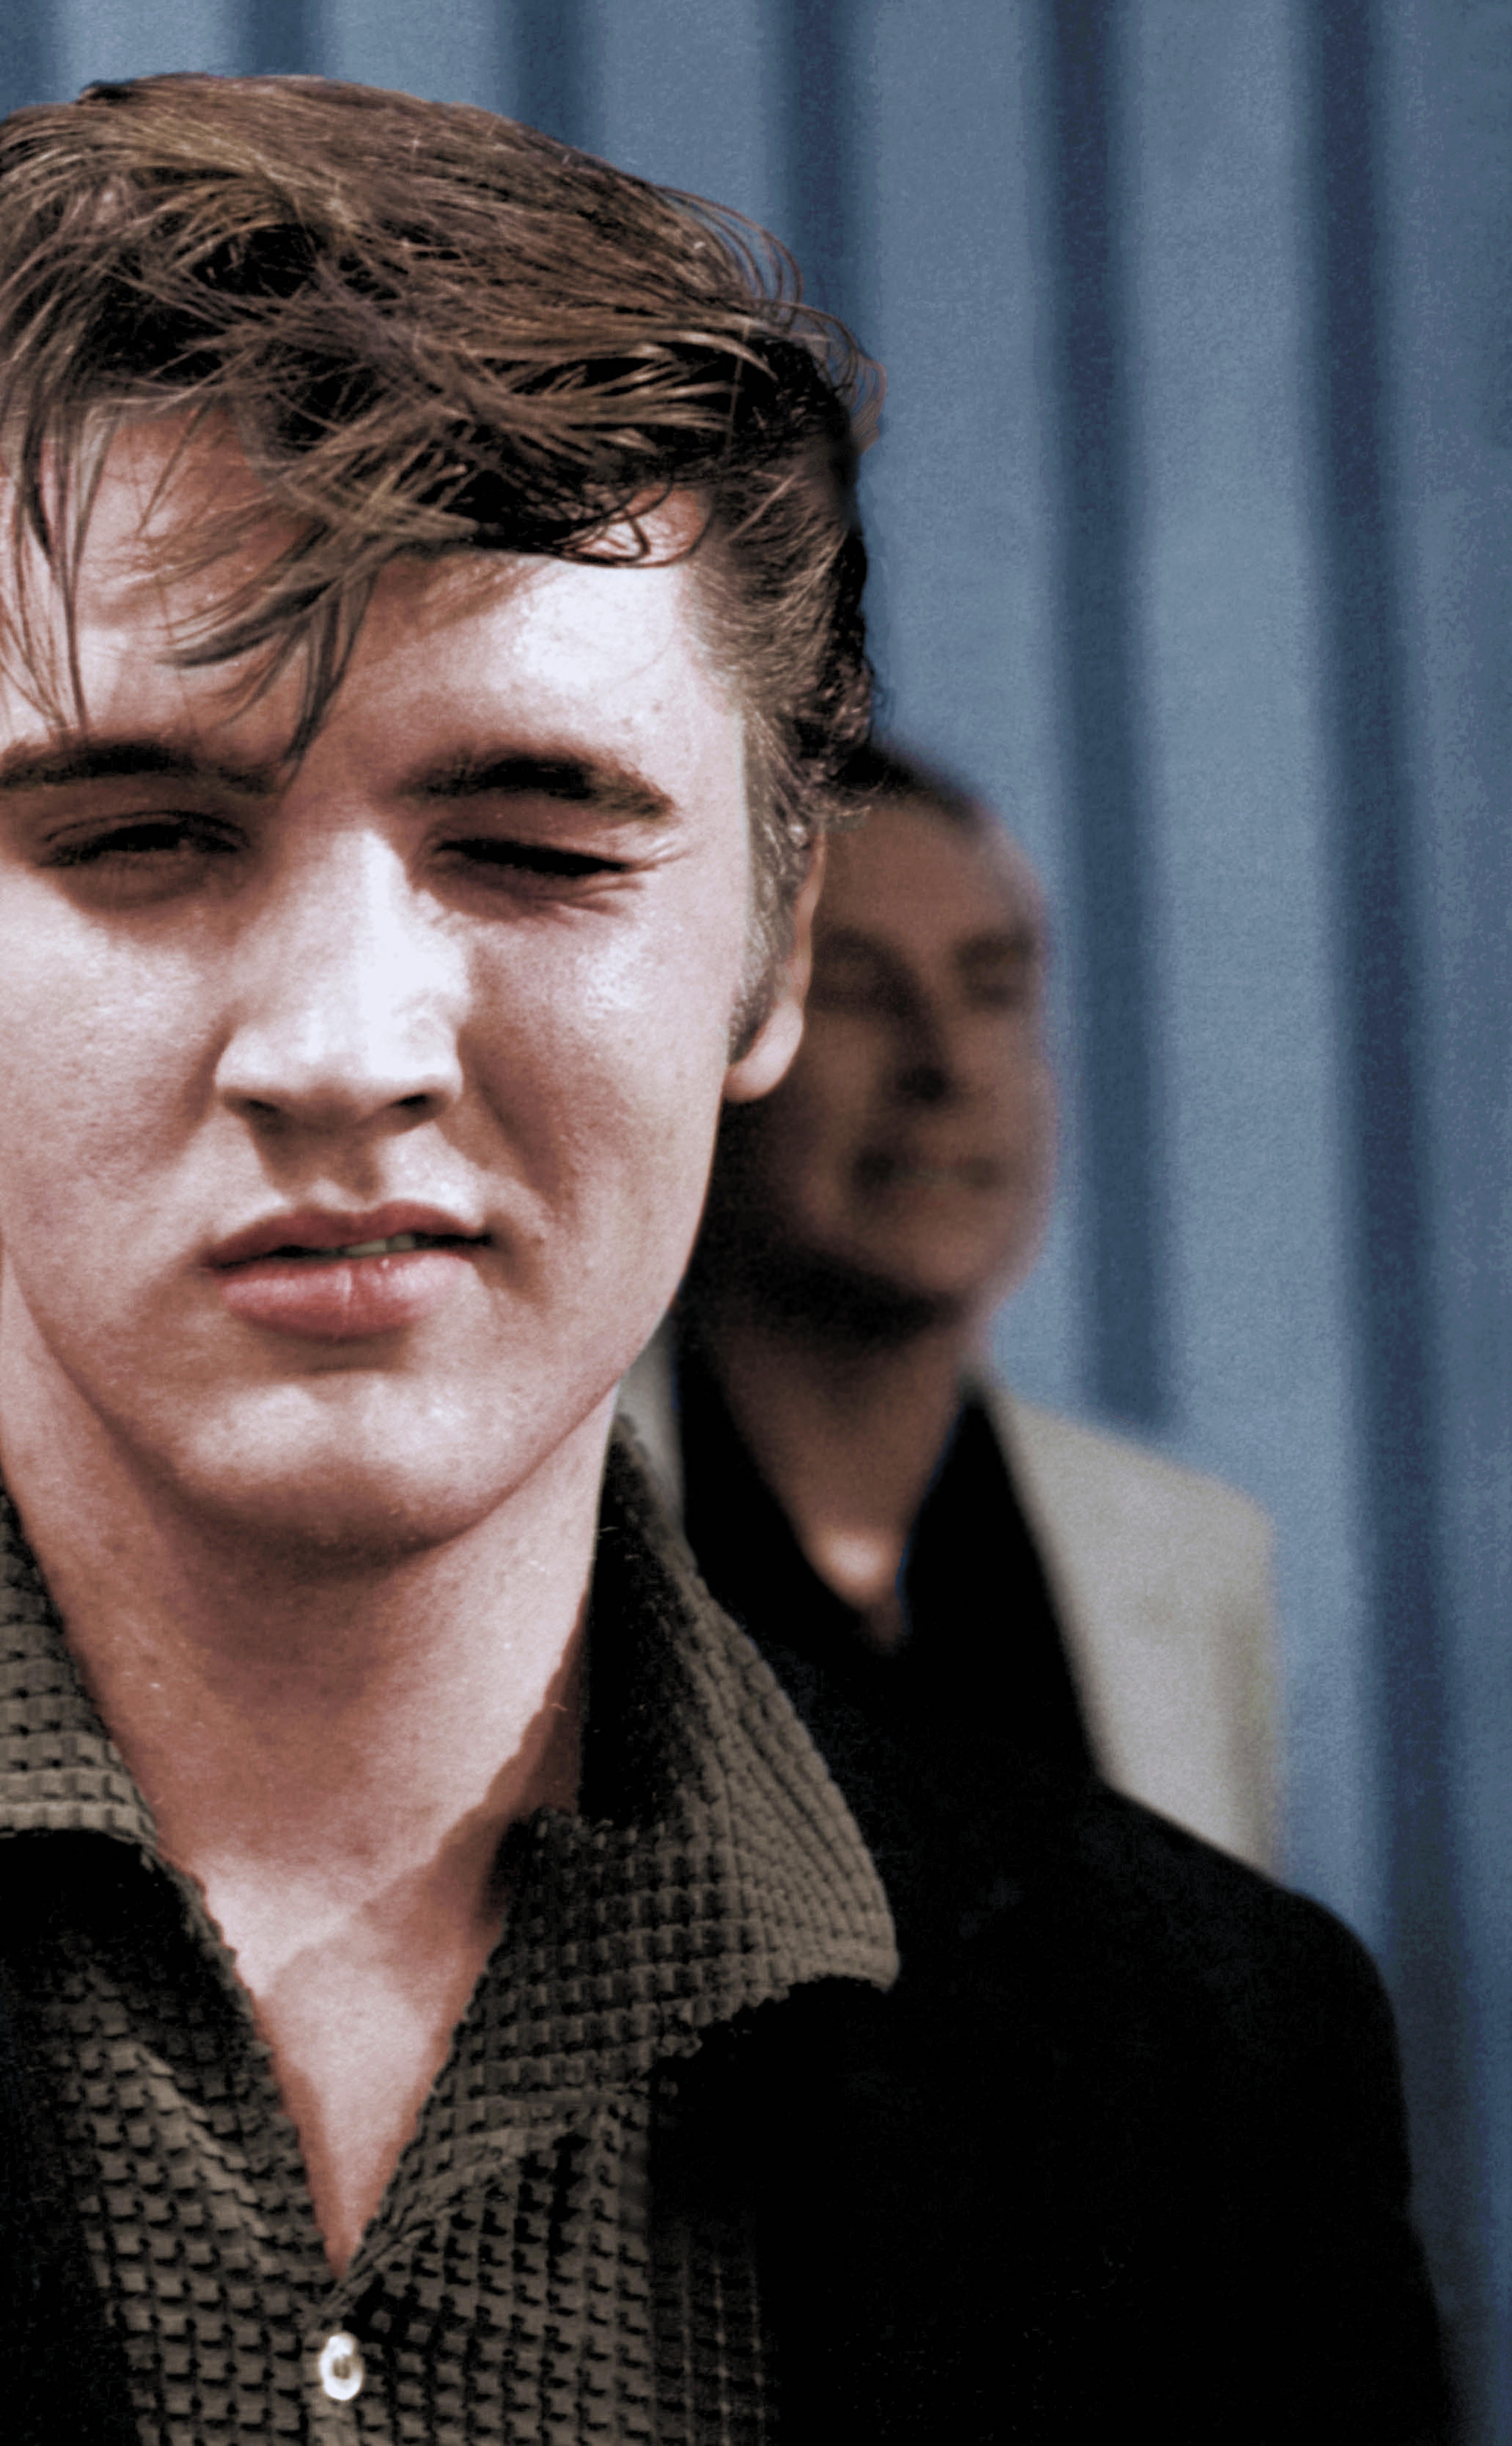 Lloyd Dinkins Color Photograph - Elvis Presley: The Wink